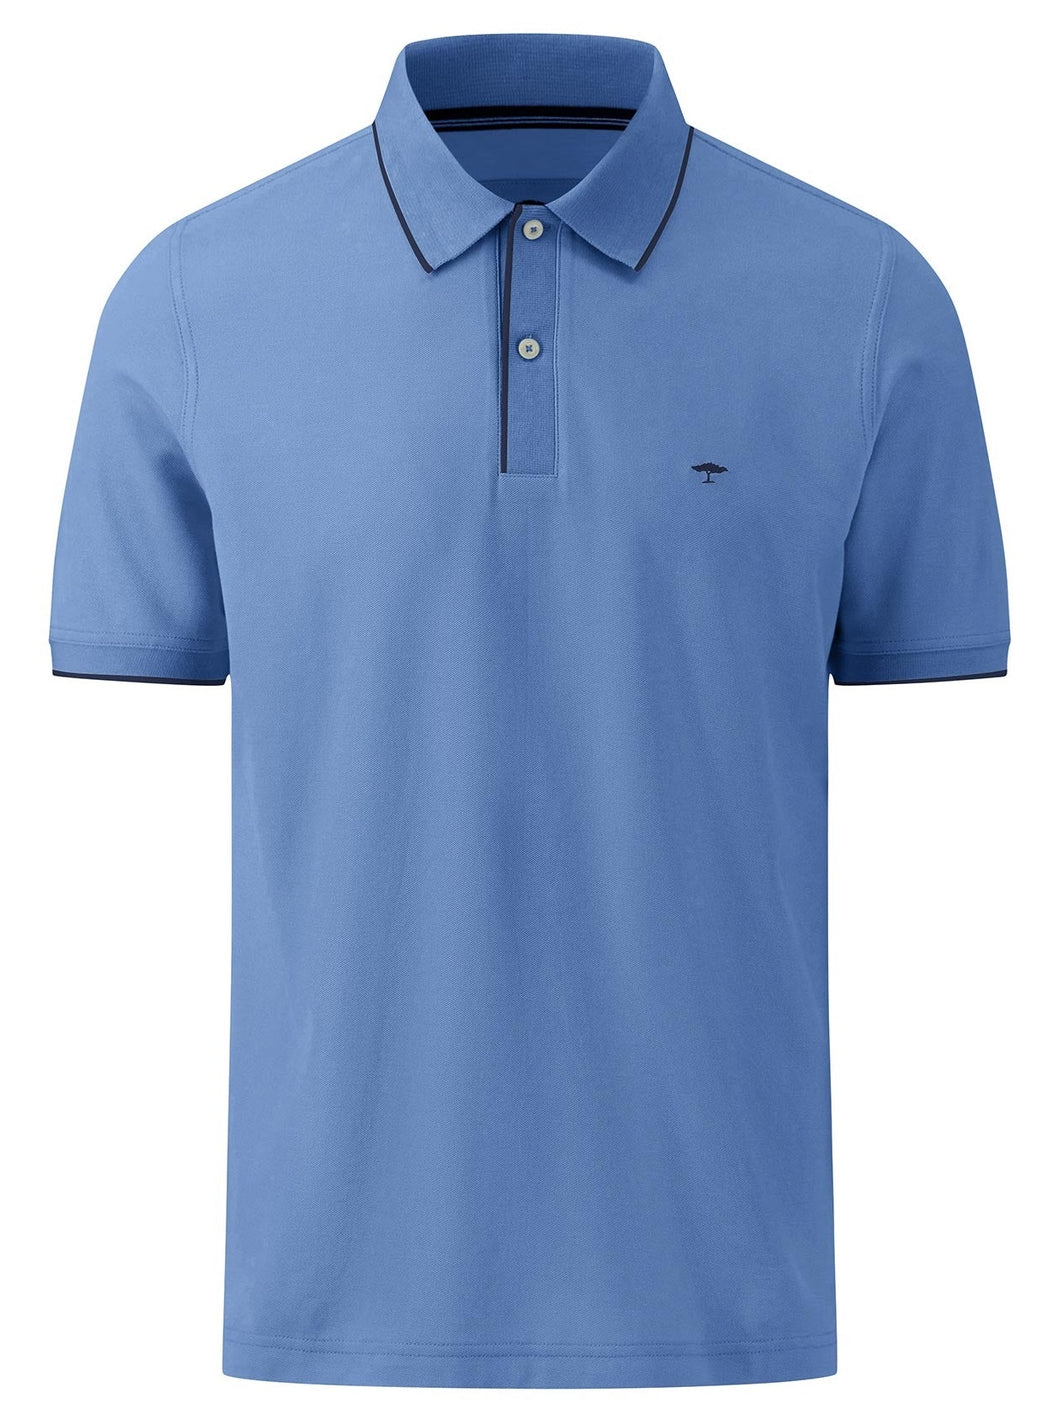 20% OFF FYNCH HATTON Modern-Fit Polo Shirt - Men's Cotton Pique – Crystal Blue -Size: XL